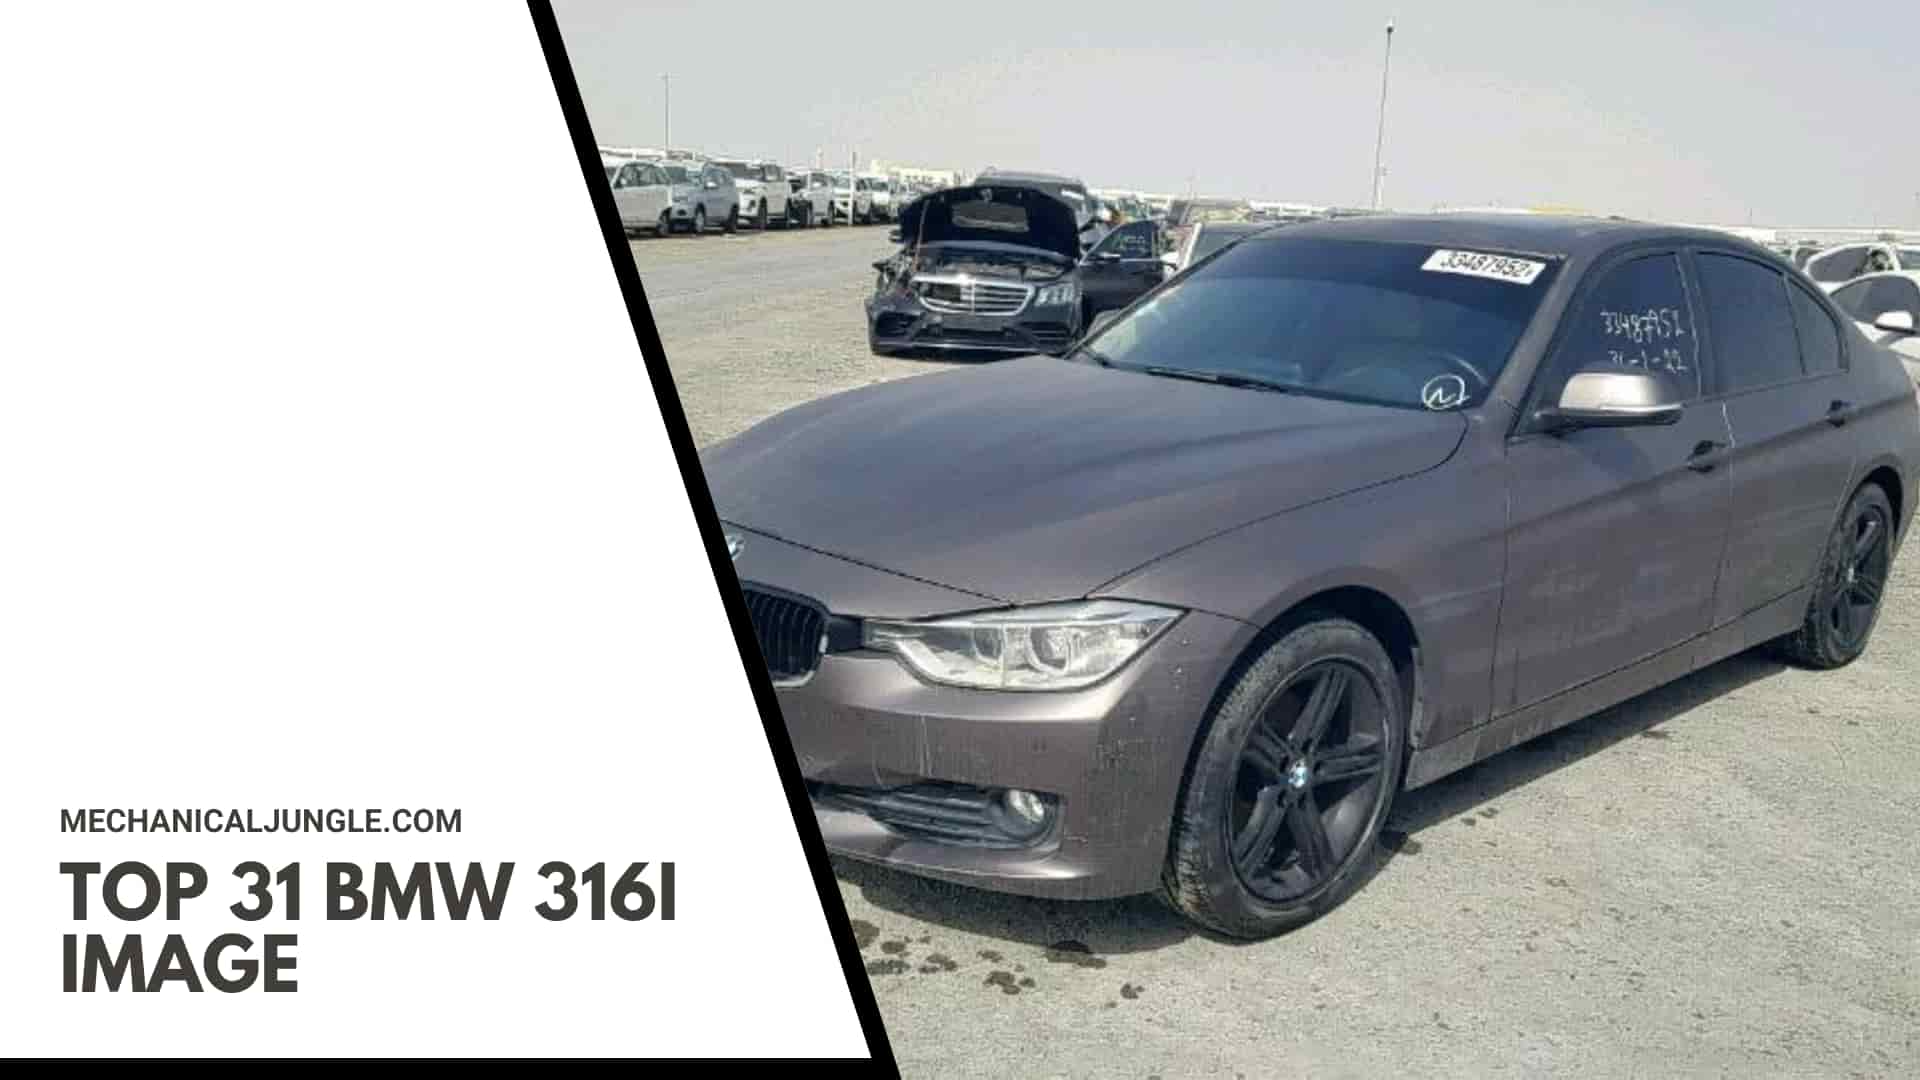 Top 31 BMW 316i Image